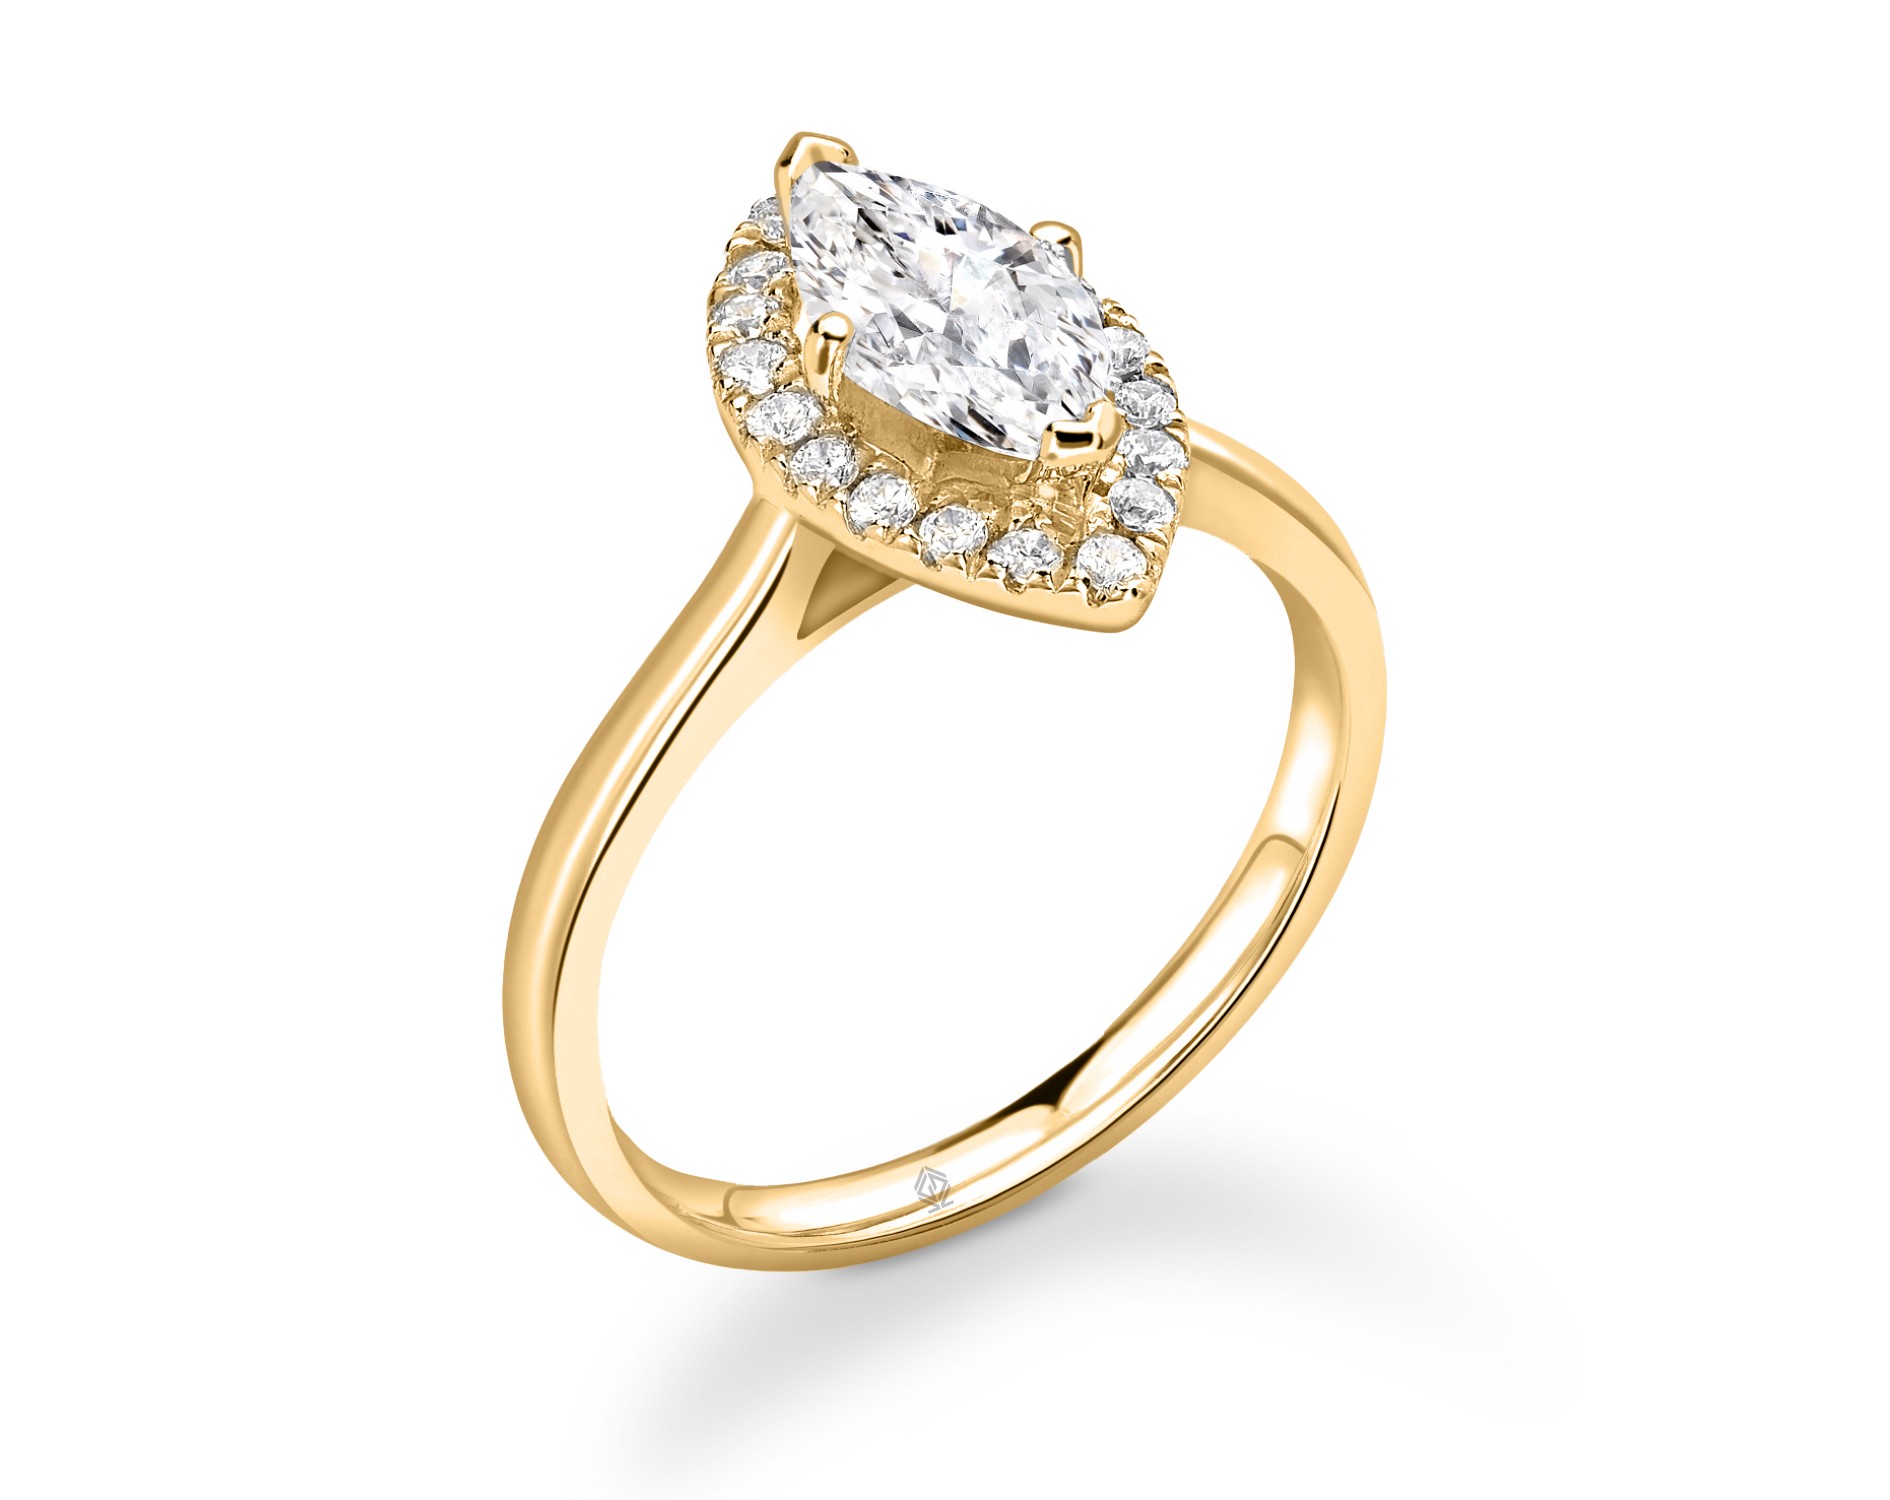 18K YELLOW GOLD HALO SET MARQUISE CUT DIAMOND ENGAGEMENT RING